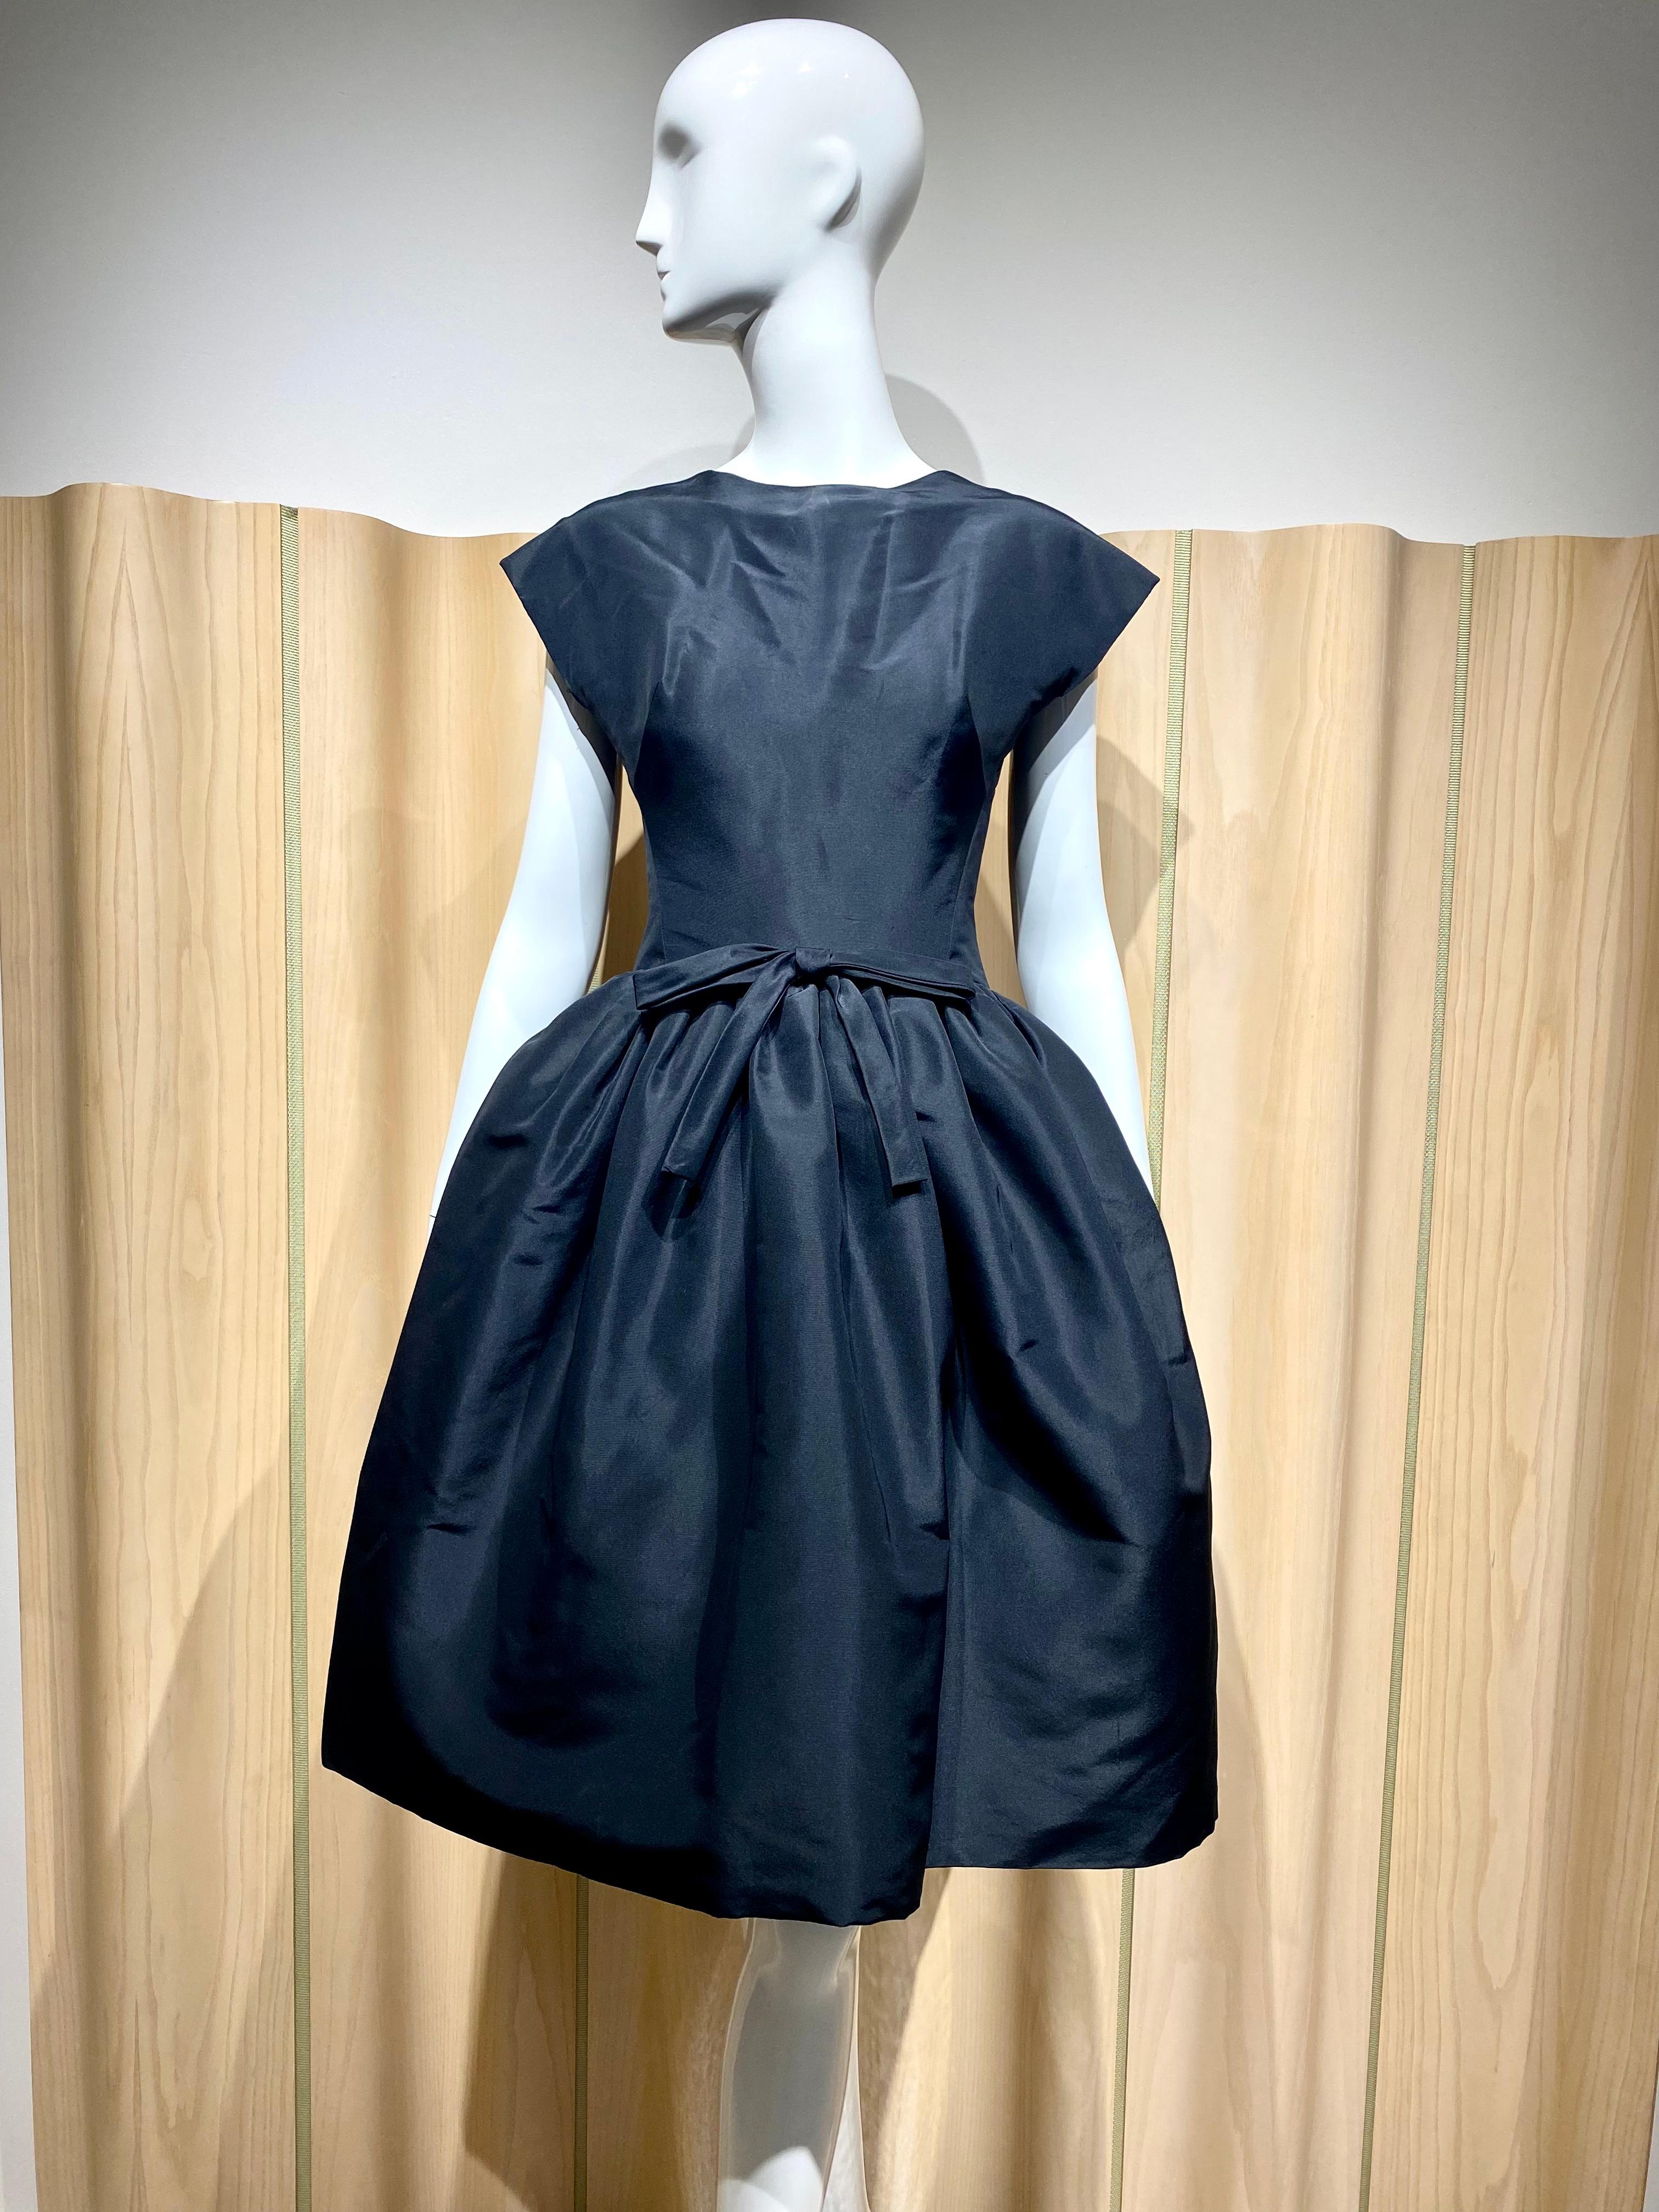 Early 60s Gustave  Tassell Black Silk cocktail Dress.
Size: 2/ XS
Measurement: 
Bust: 33” / Waist: 26”/ Hip: 44”/ Dress Length: 37”